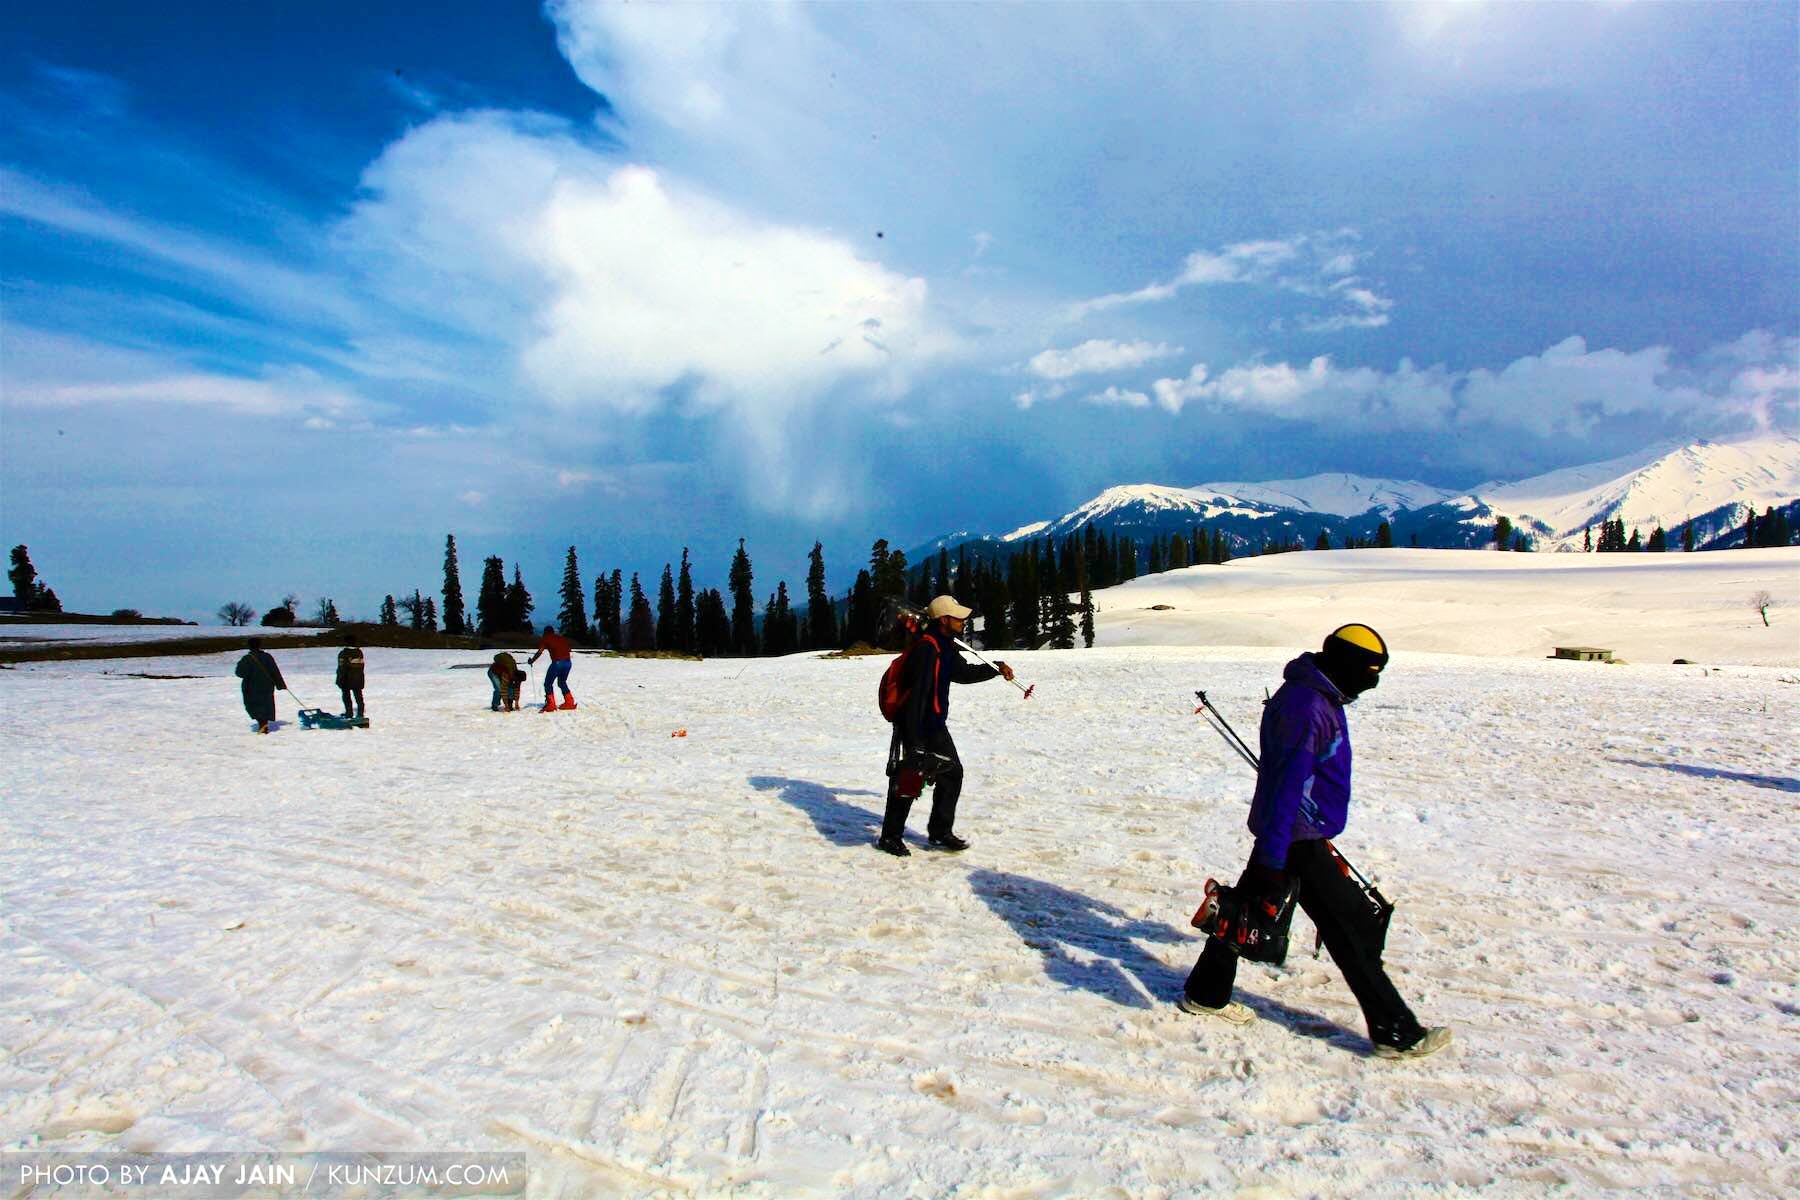 Snow,Winter,Sky,Cloud,Fun,Vacation,Tourism,Recreation,Freezing,Mountain